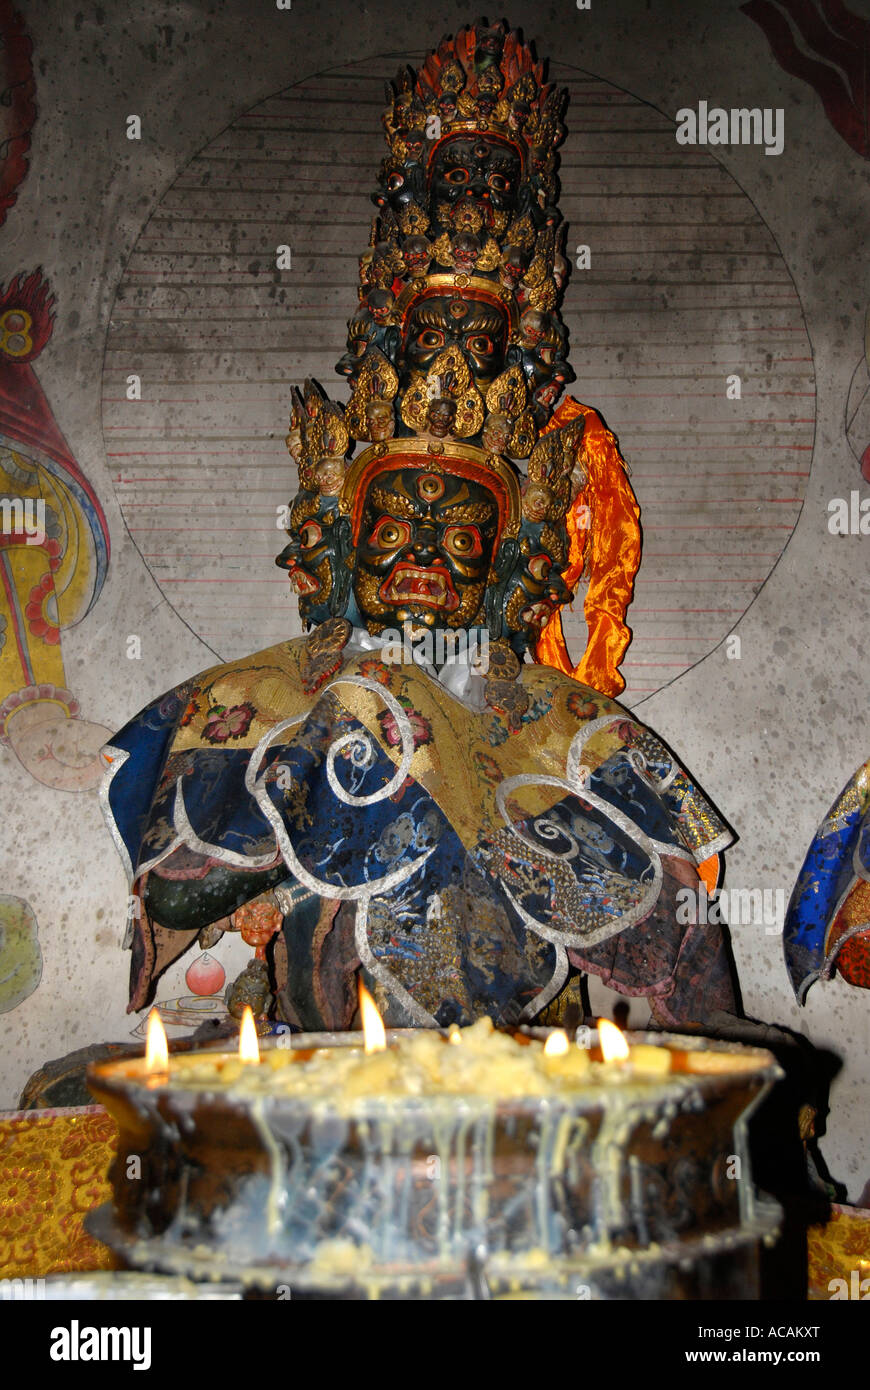 Tibetan Buddhism figure fearesome protector demon with many heads Jokhang Lhasa Tibet China Stock Photo